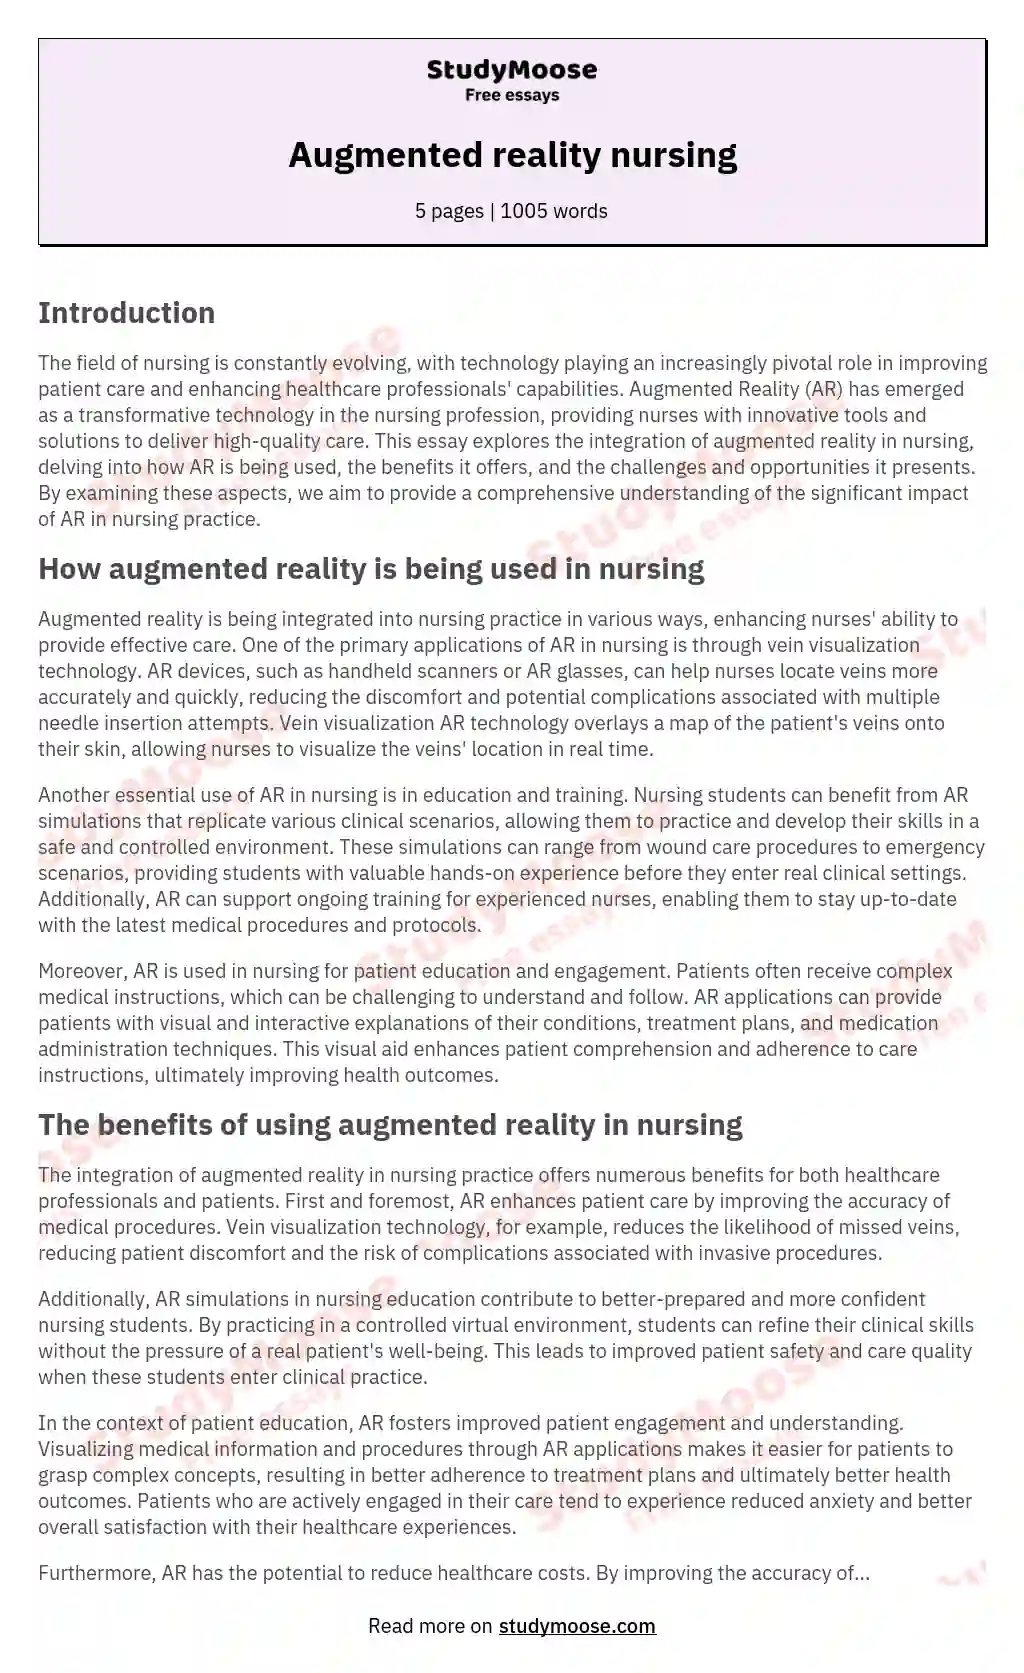 Augmented reality nursing essay